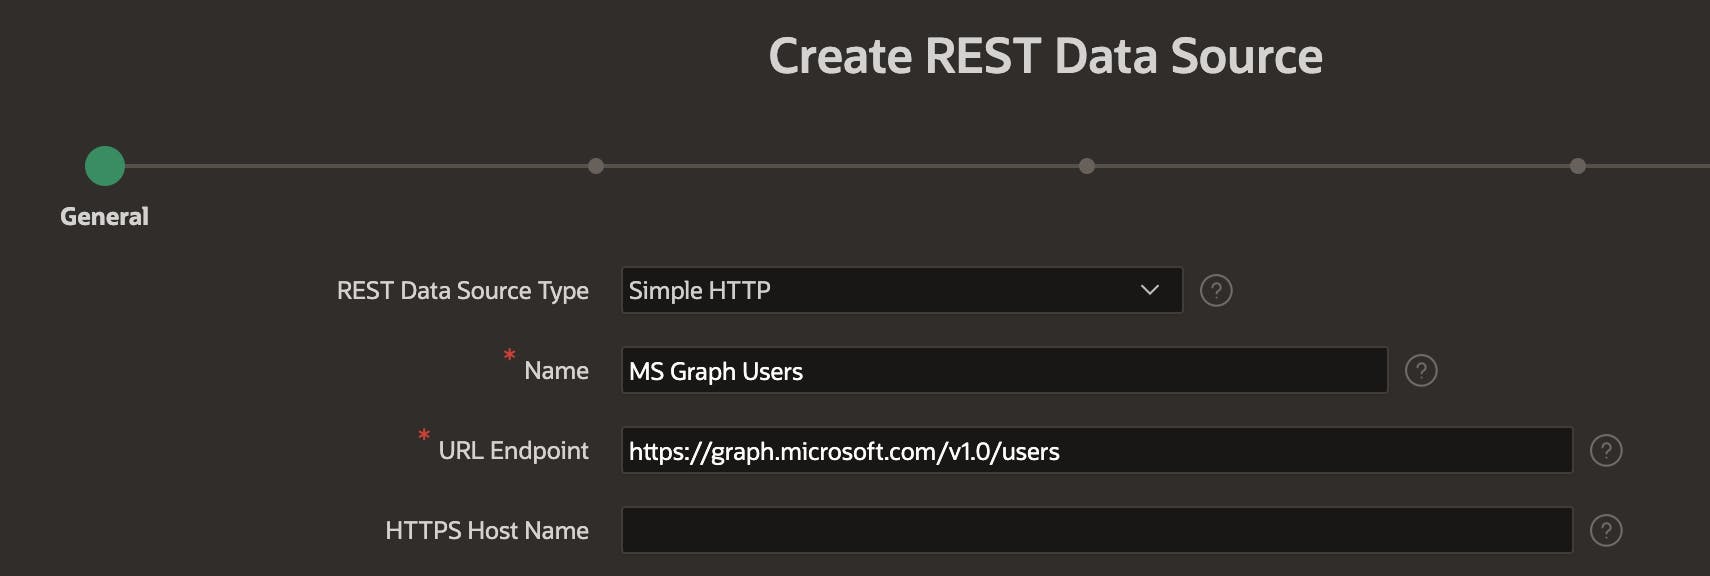 Create APEX Rest Data Source Step 1